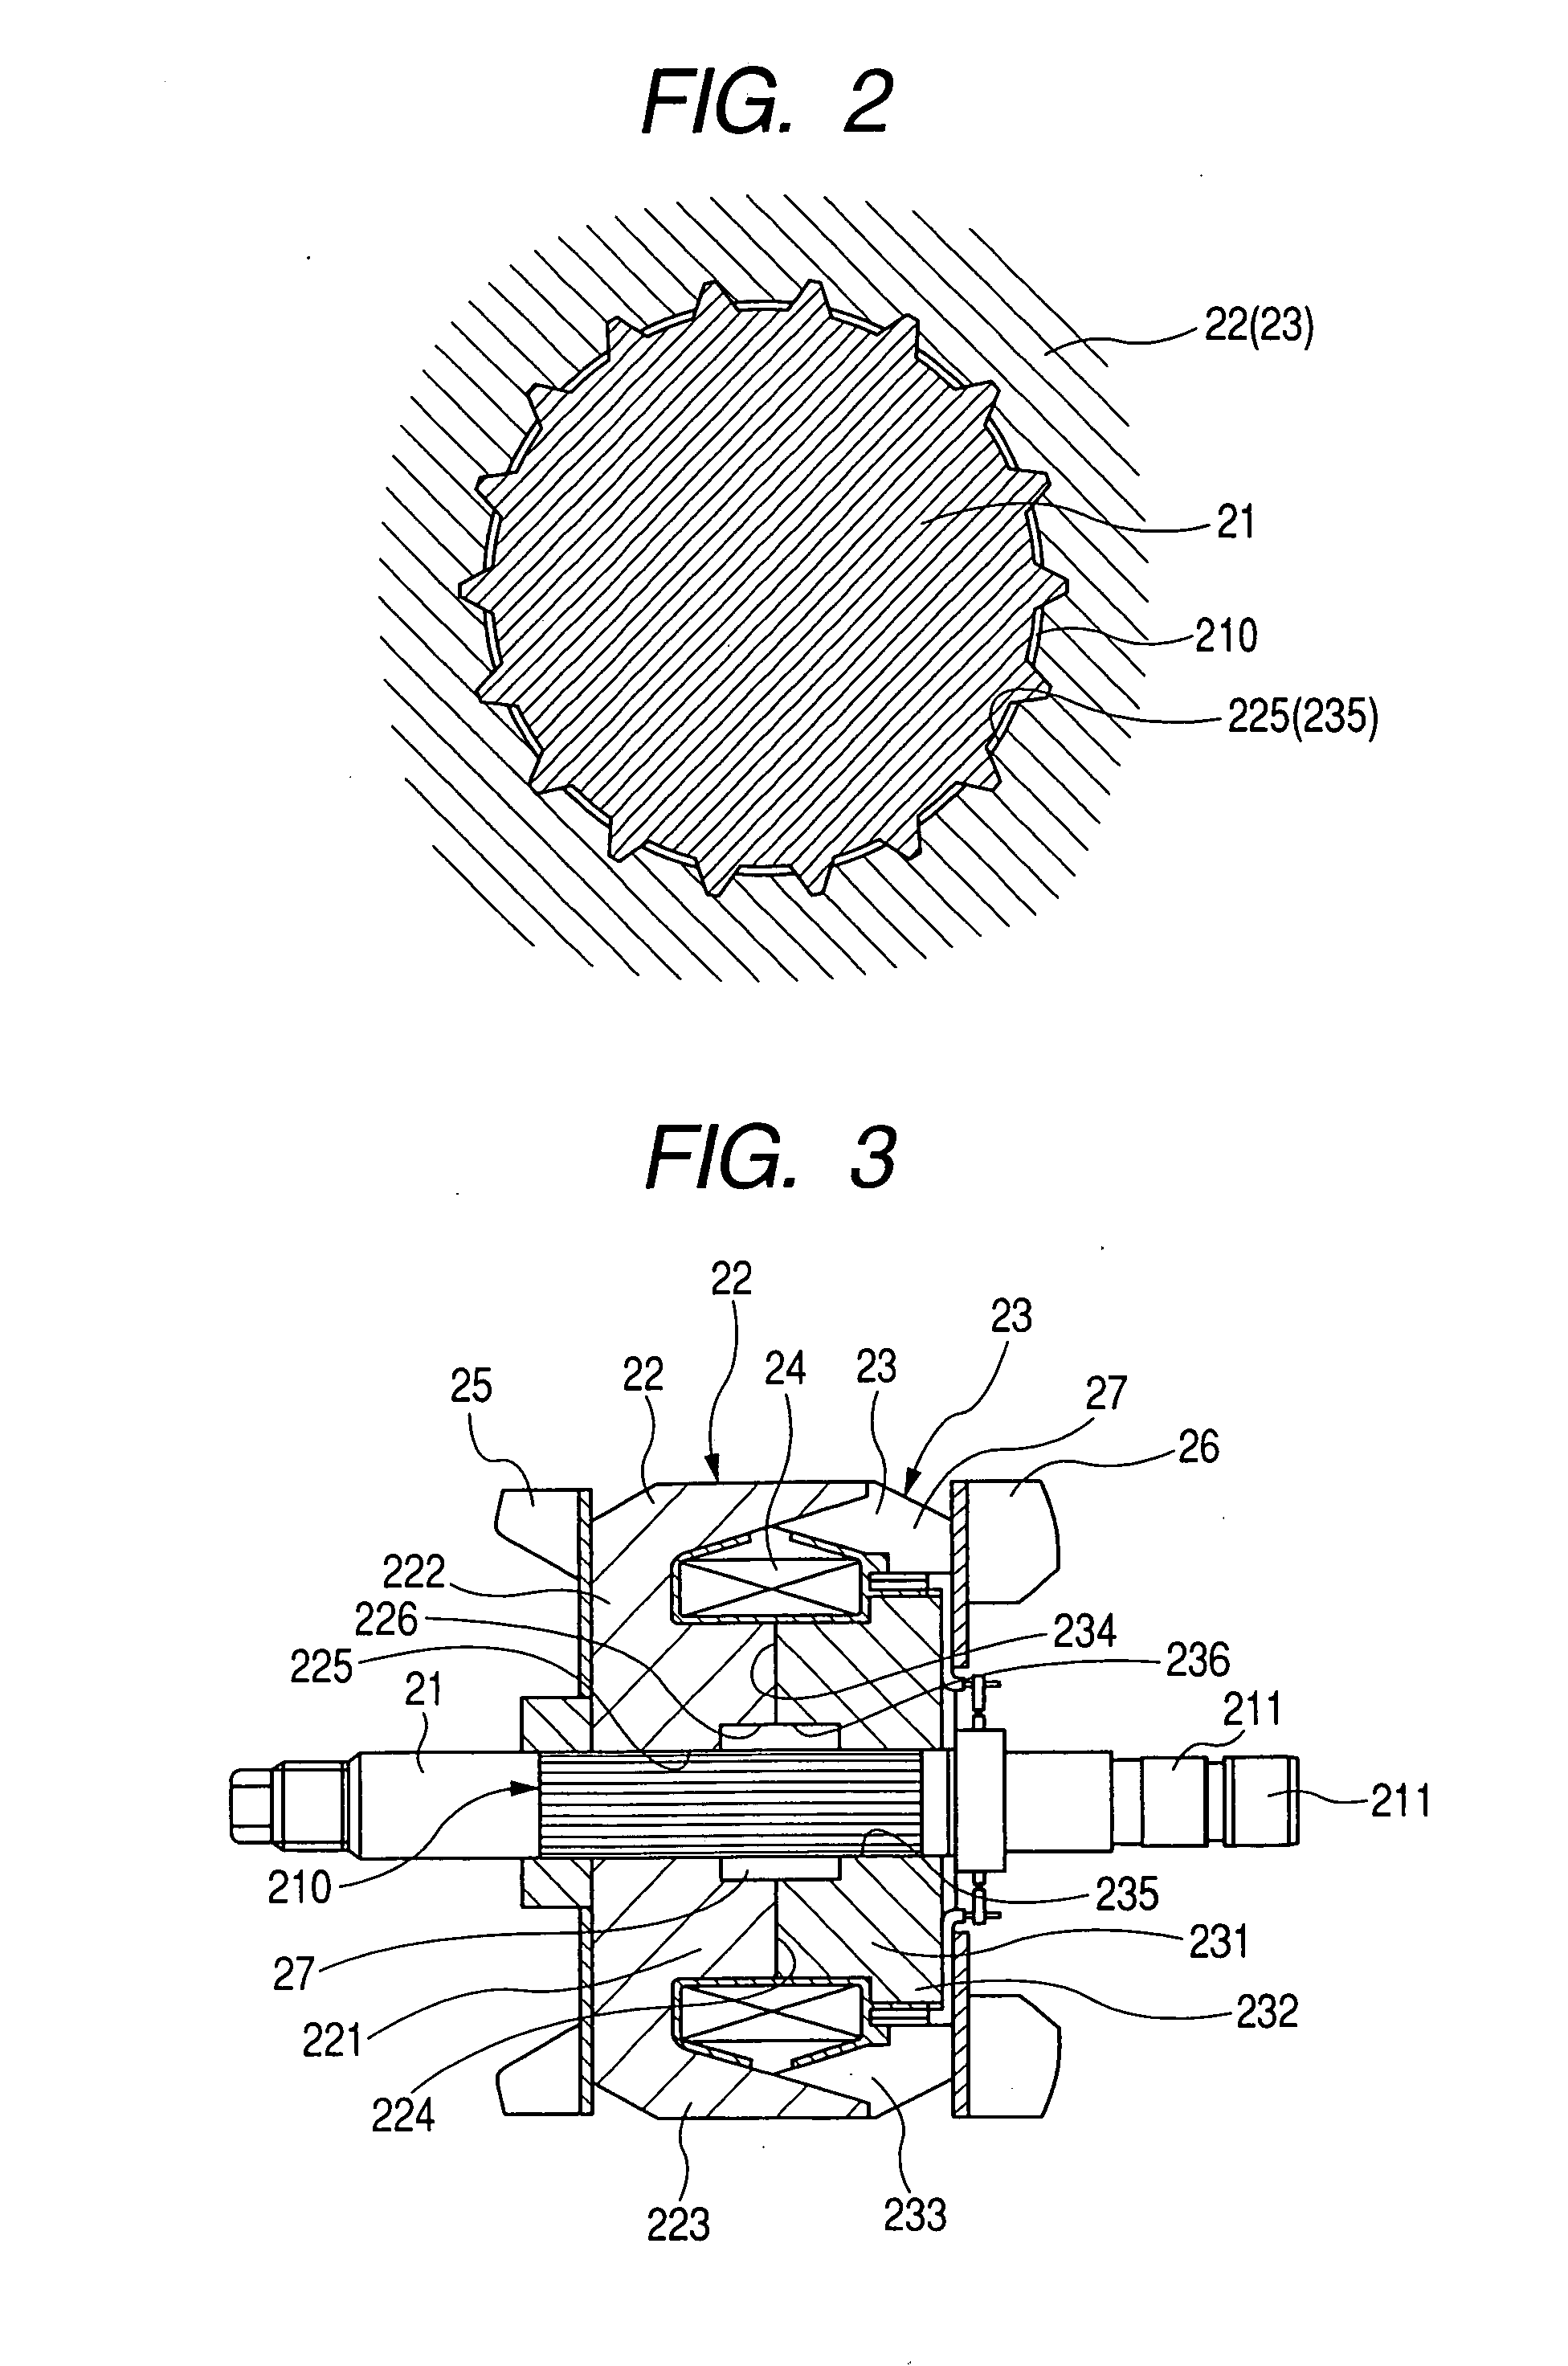 Rotor for vehicular alternating current generator